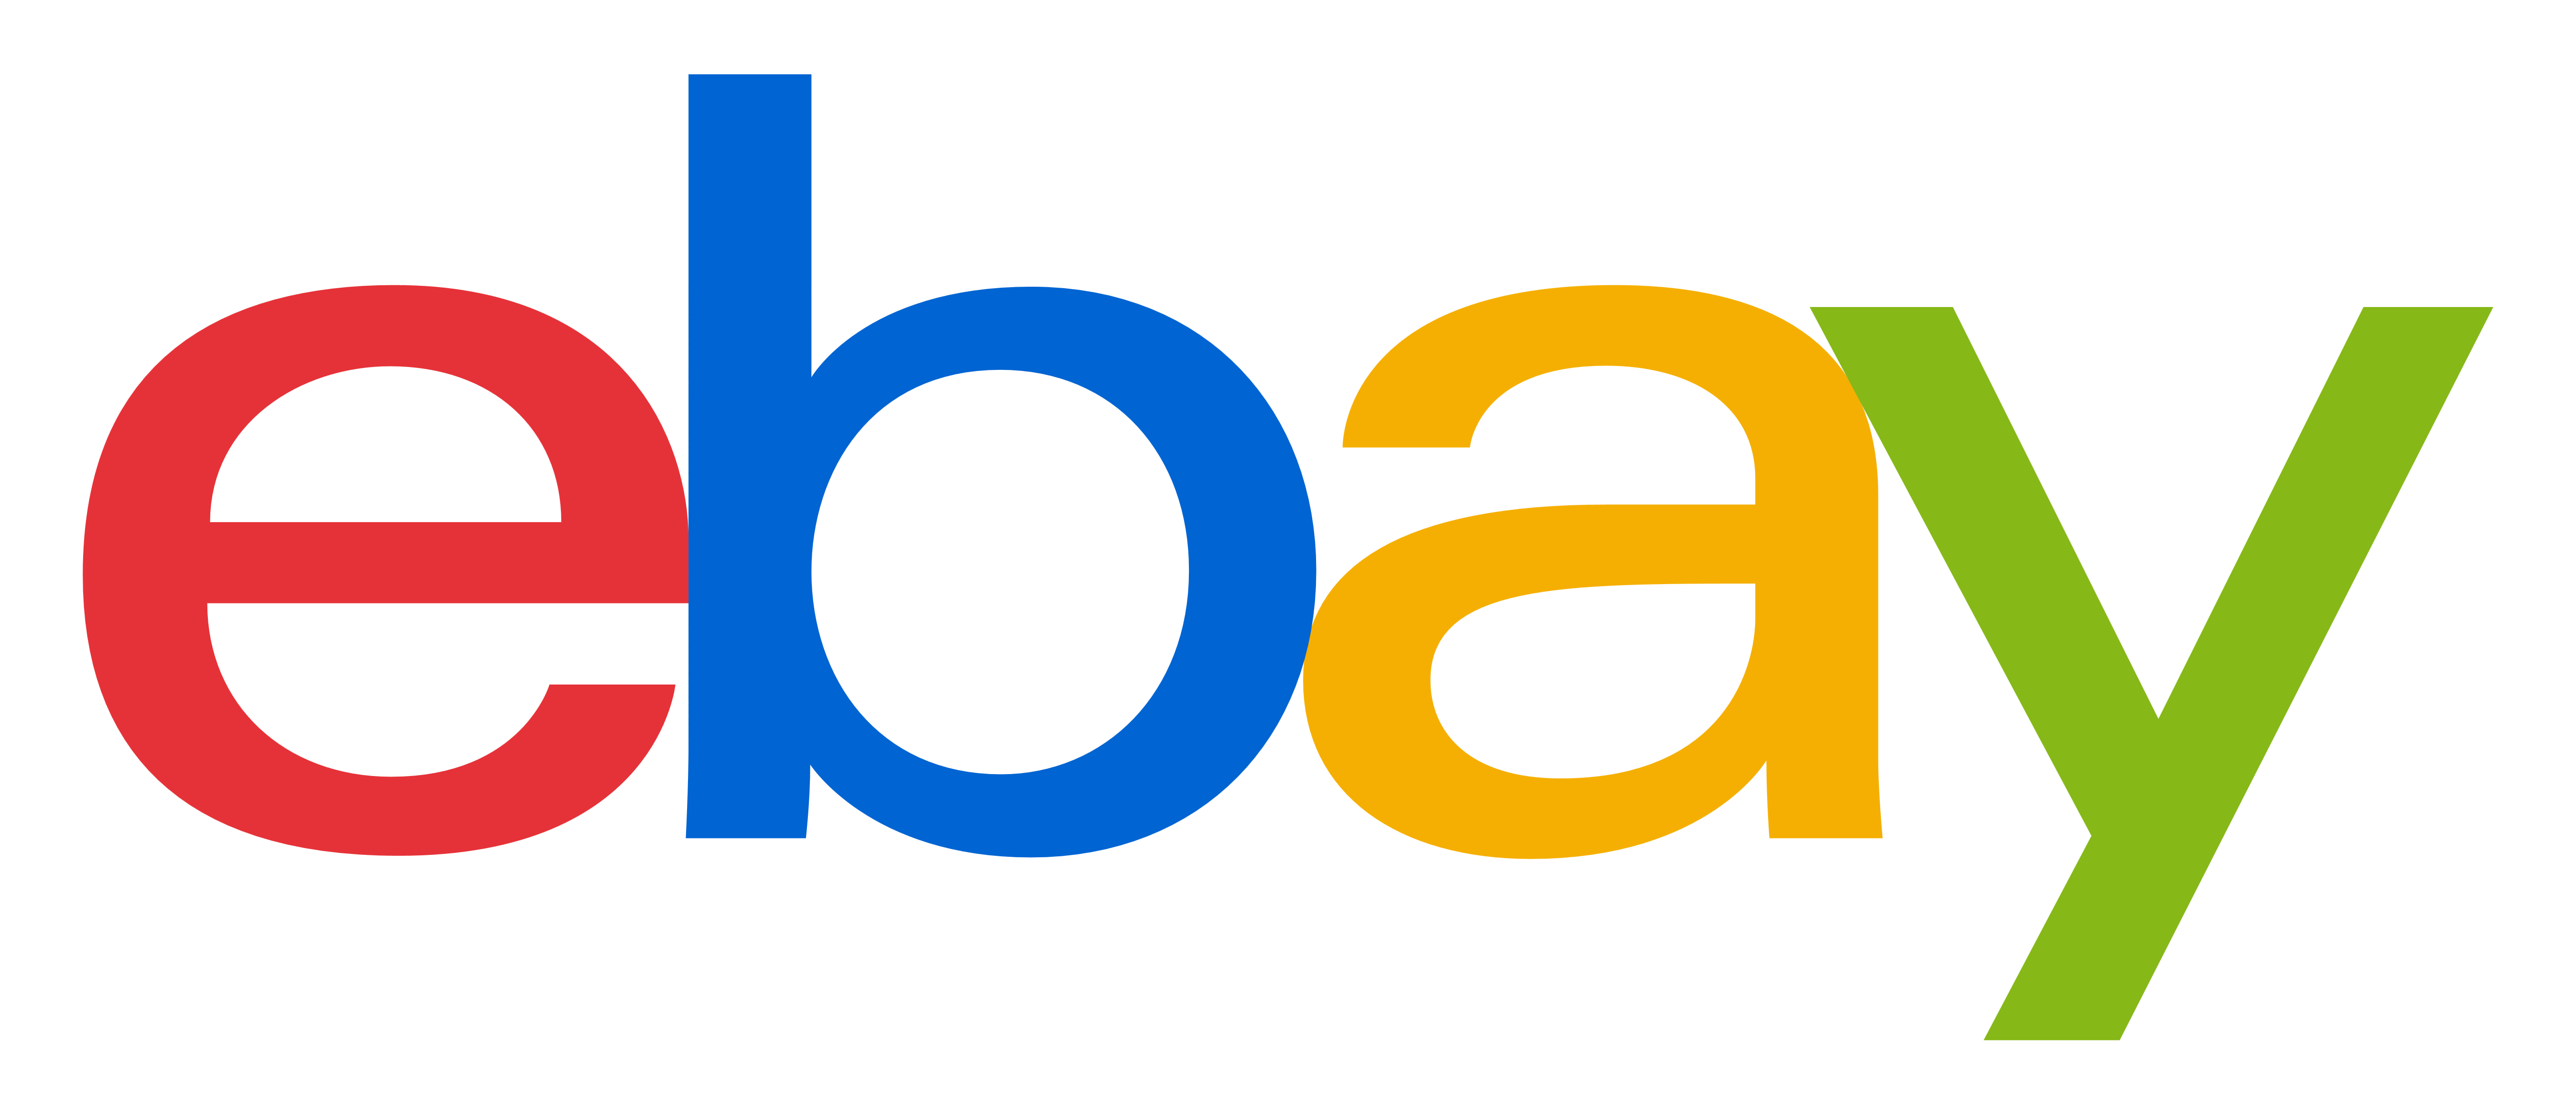 Immagini trasparenti logo ebay